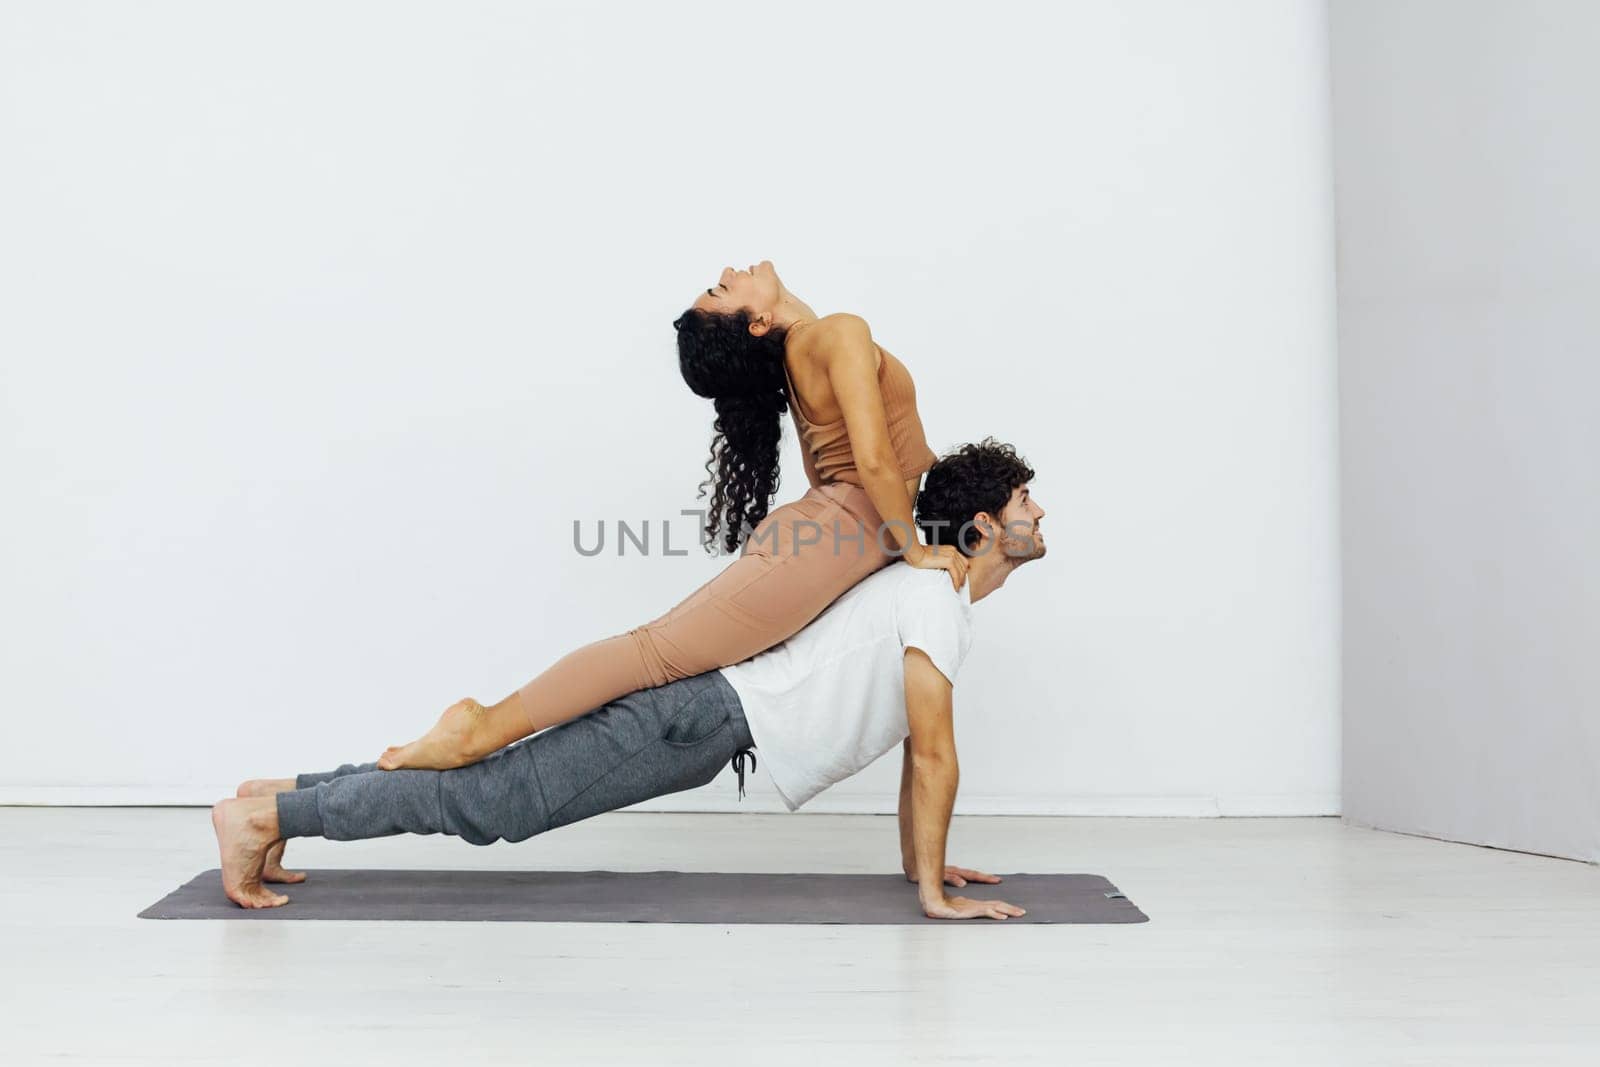 acrobatics yoga poses woman and man do gymnastics warm-up exercises asana flexible body by Simakov